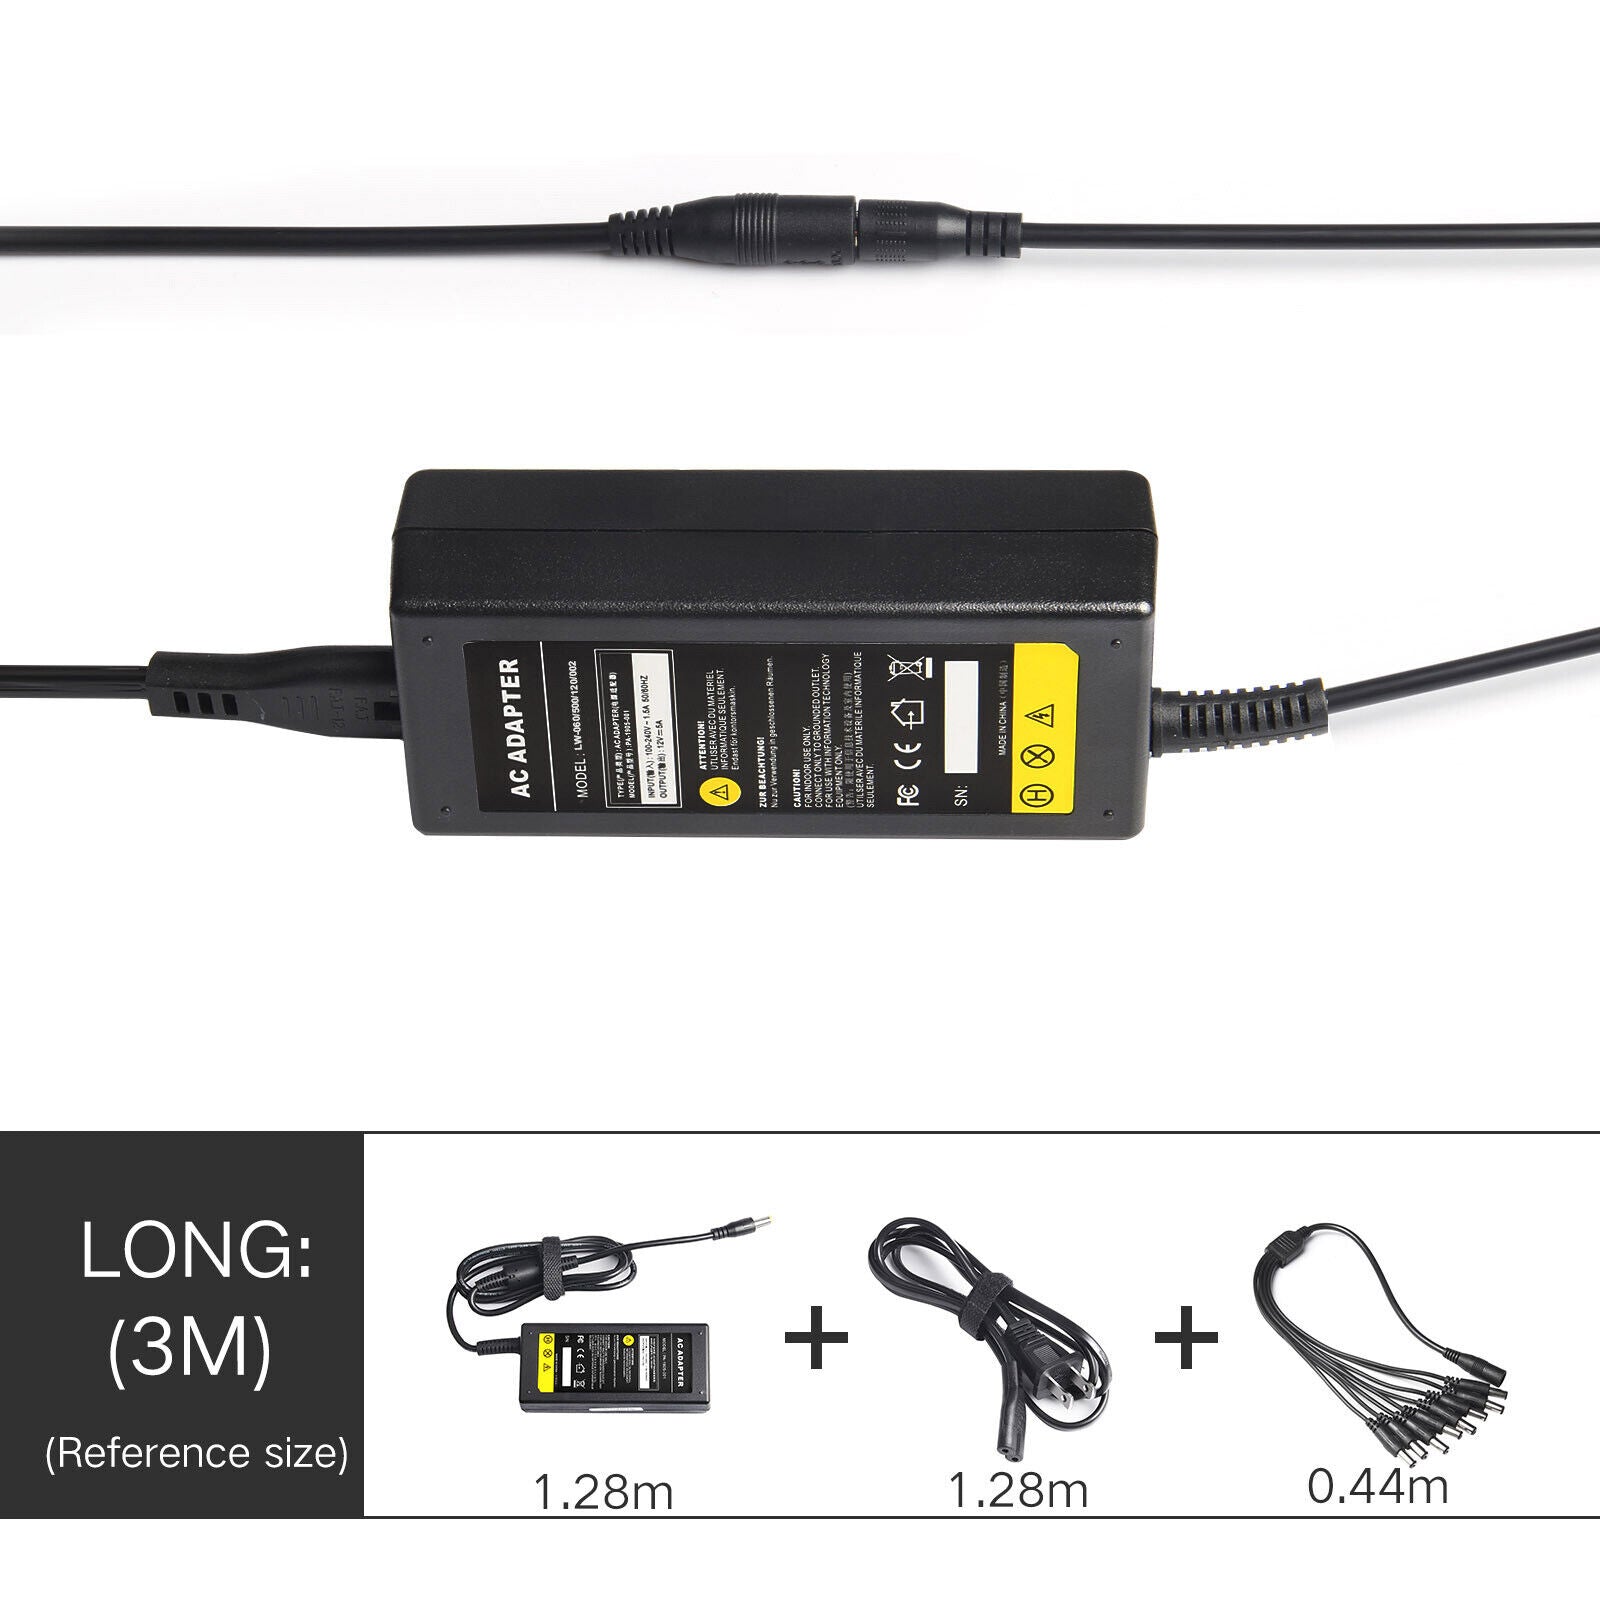 8 Split Power Supply Cord For CCTV Security Camera DVR Swann Lorex Defender AU - Office Catch